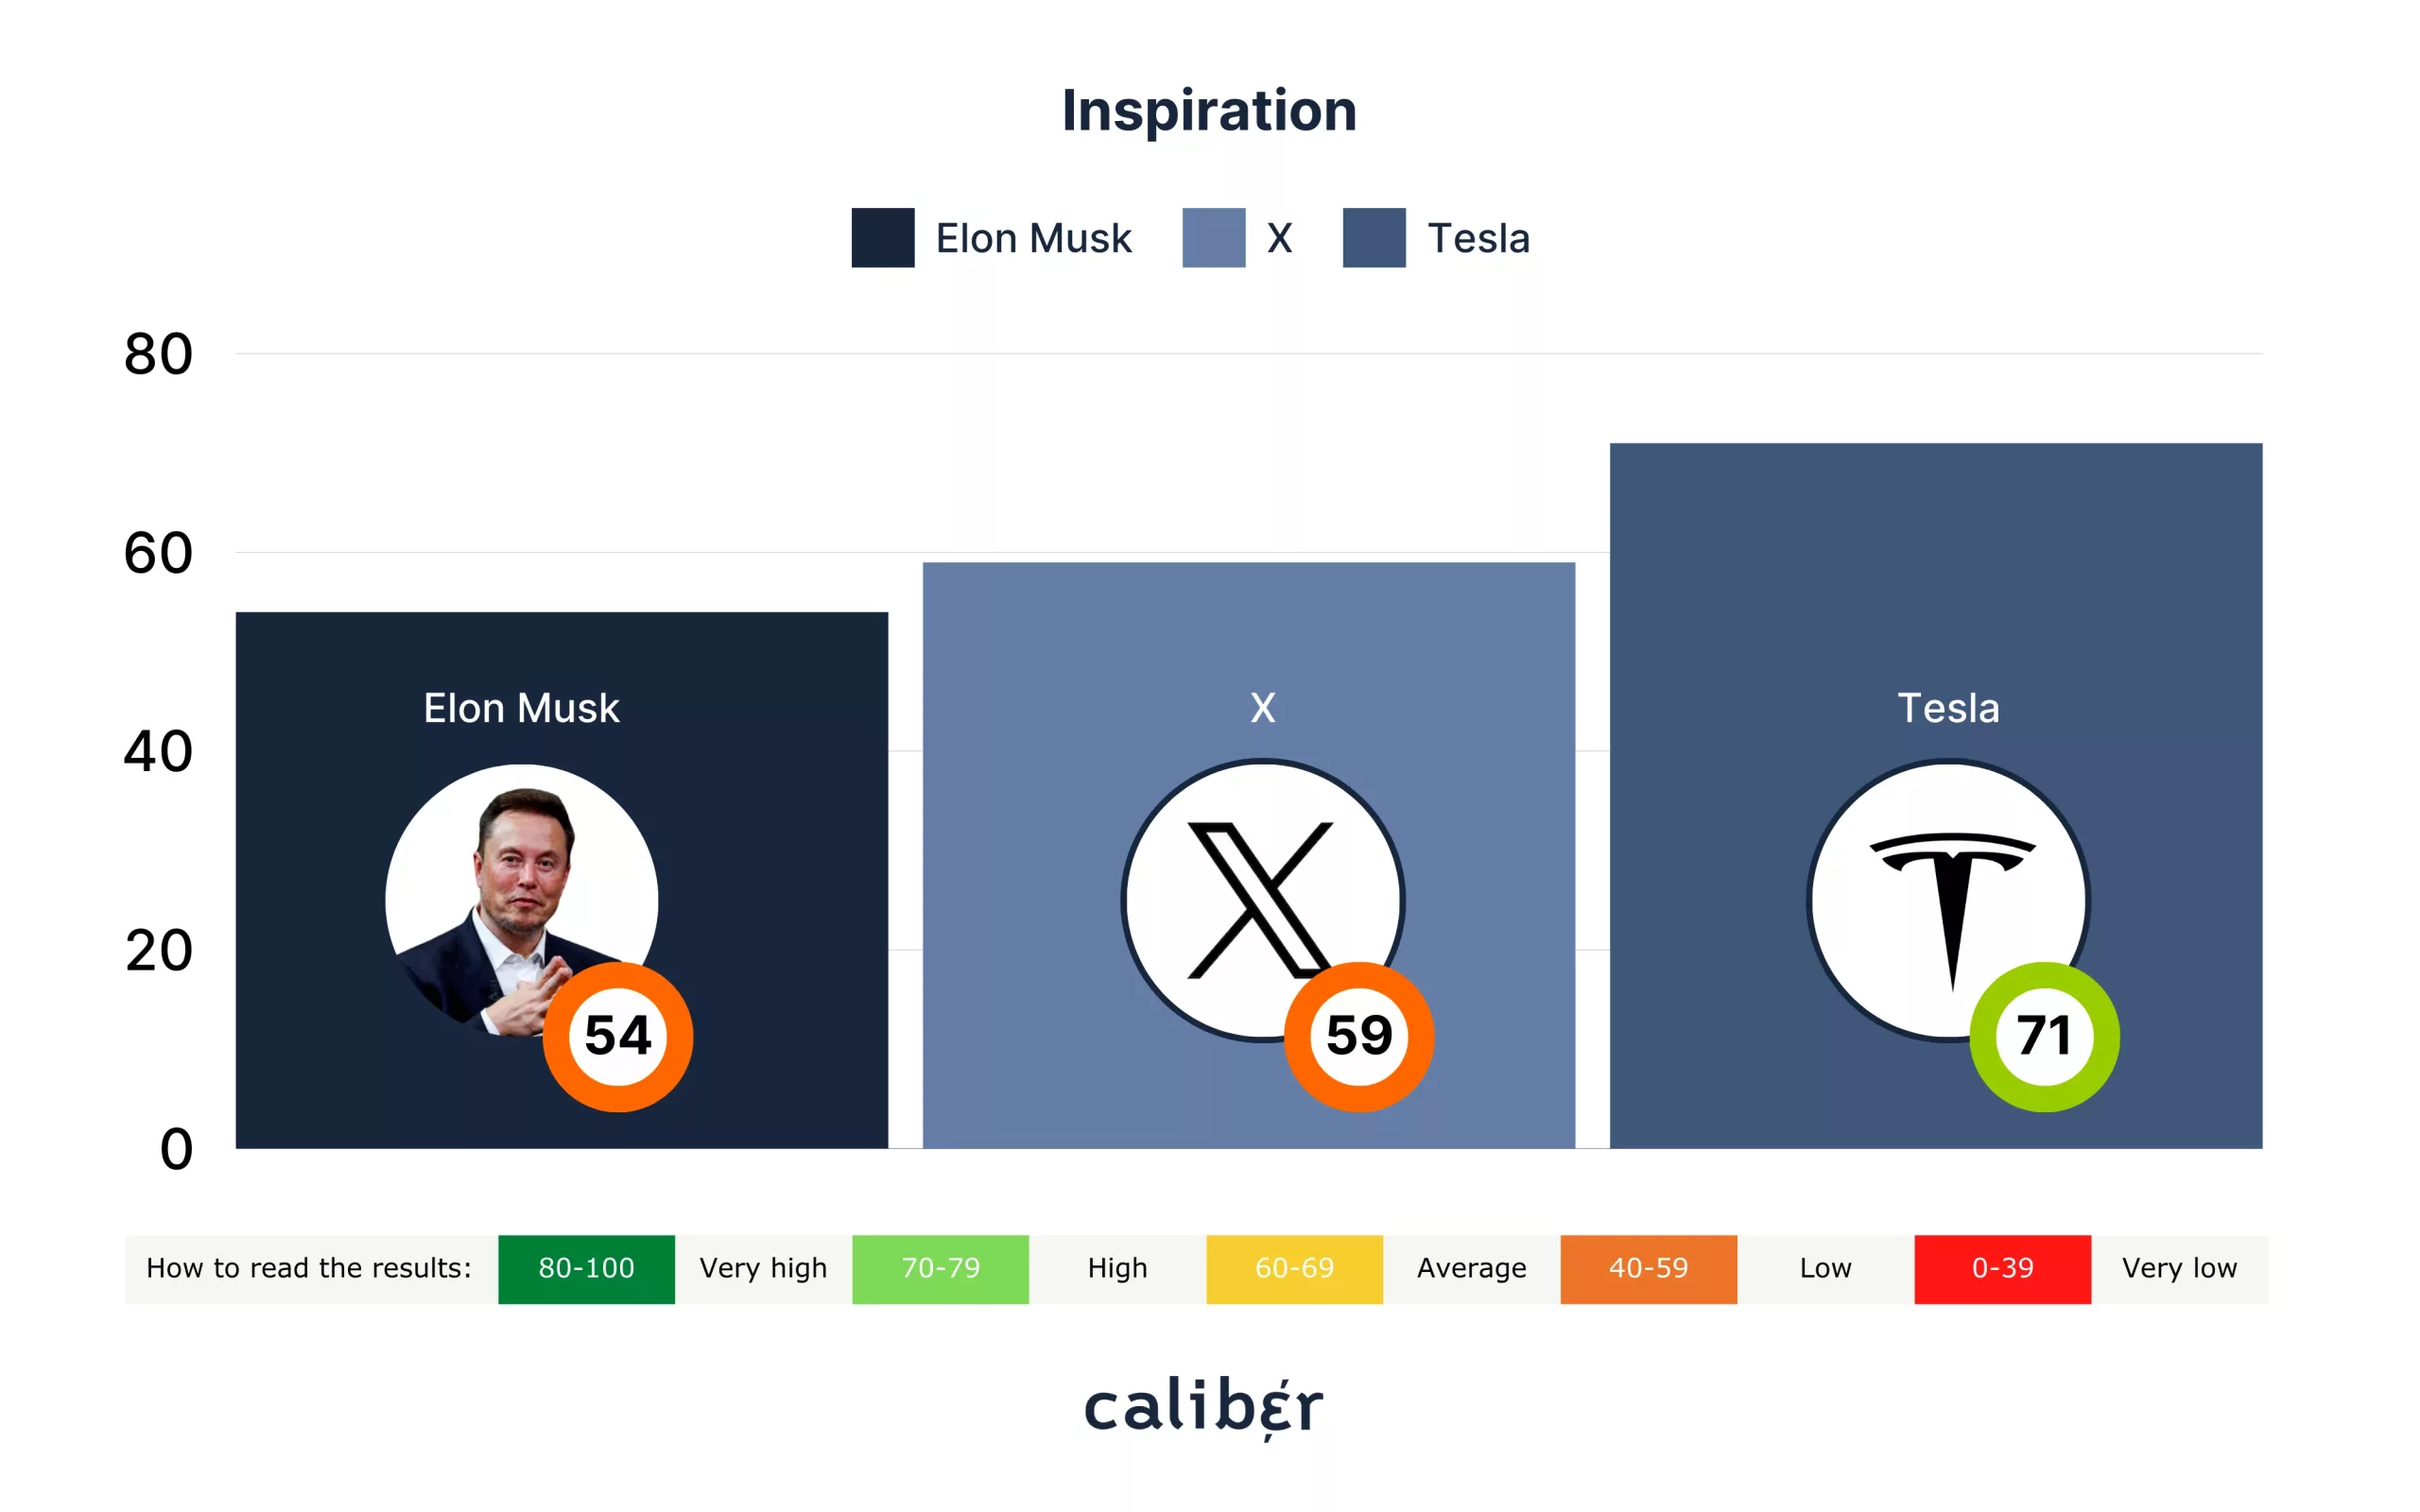 Elon Musk Inspiration Score